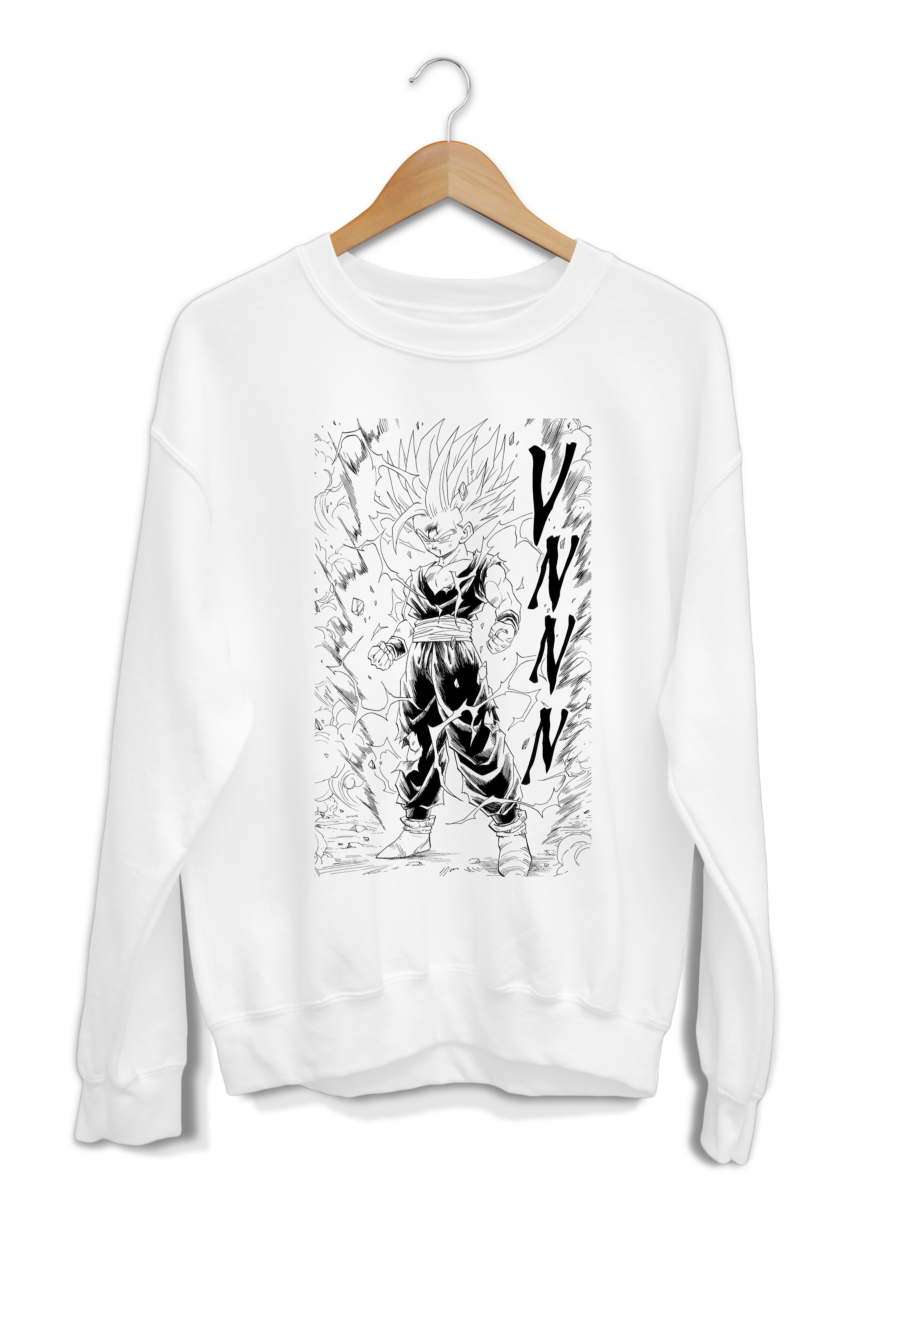 Gohan's Rage-Induced Transformation vs. Cell Sweatshirt T-Shirt Design